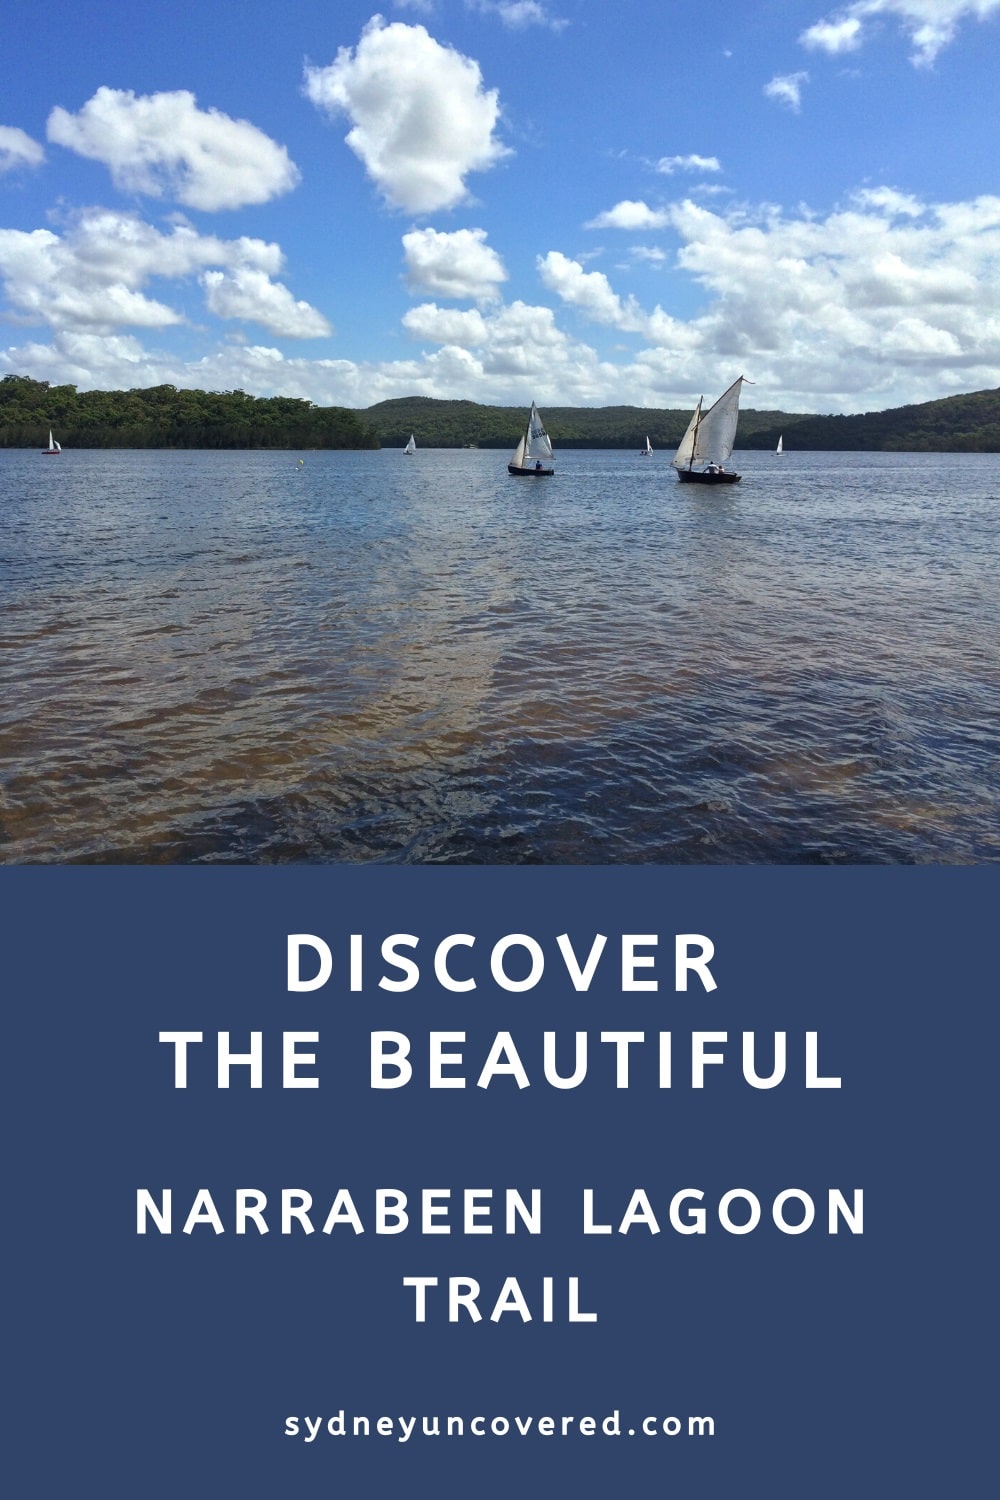 Narrabeen Lagoon Trail